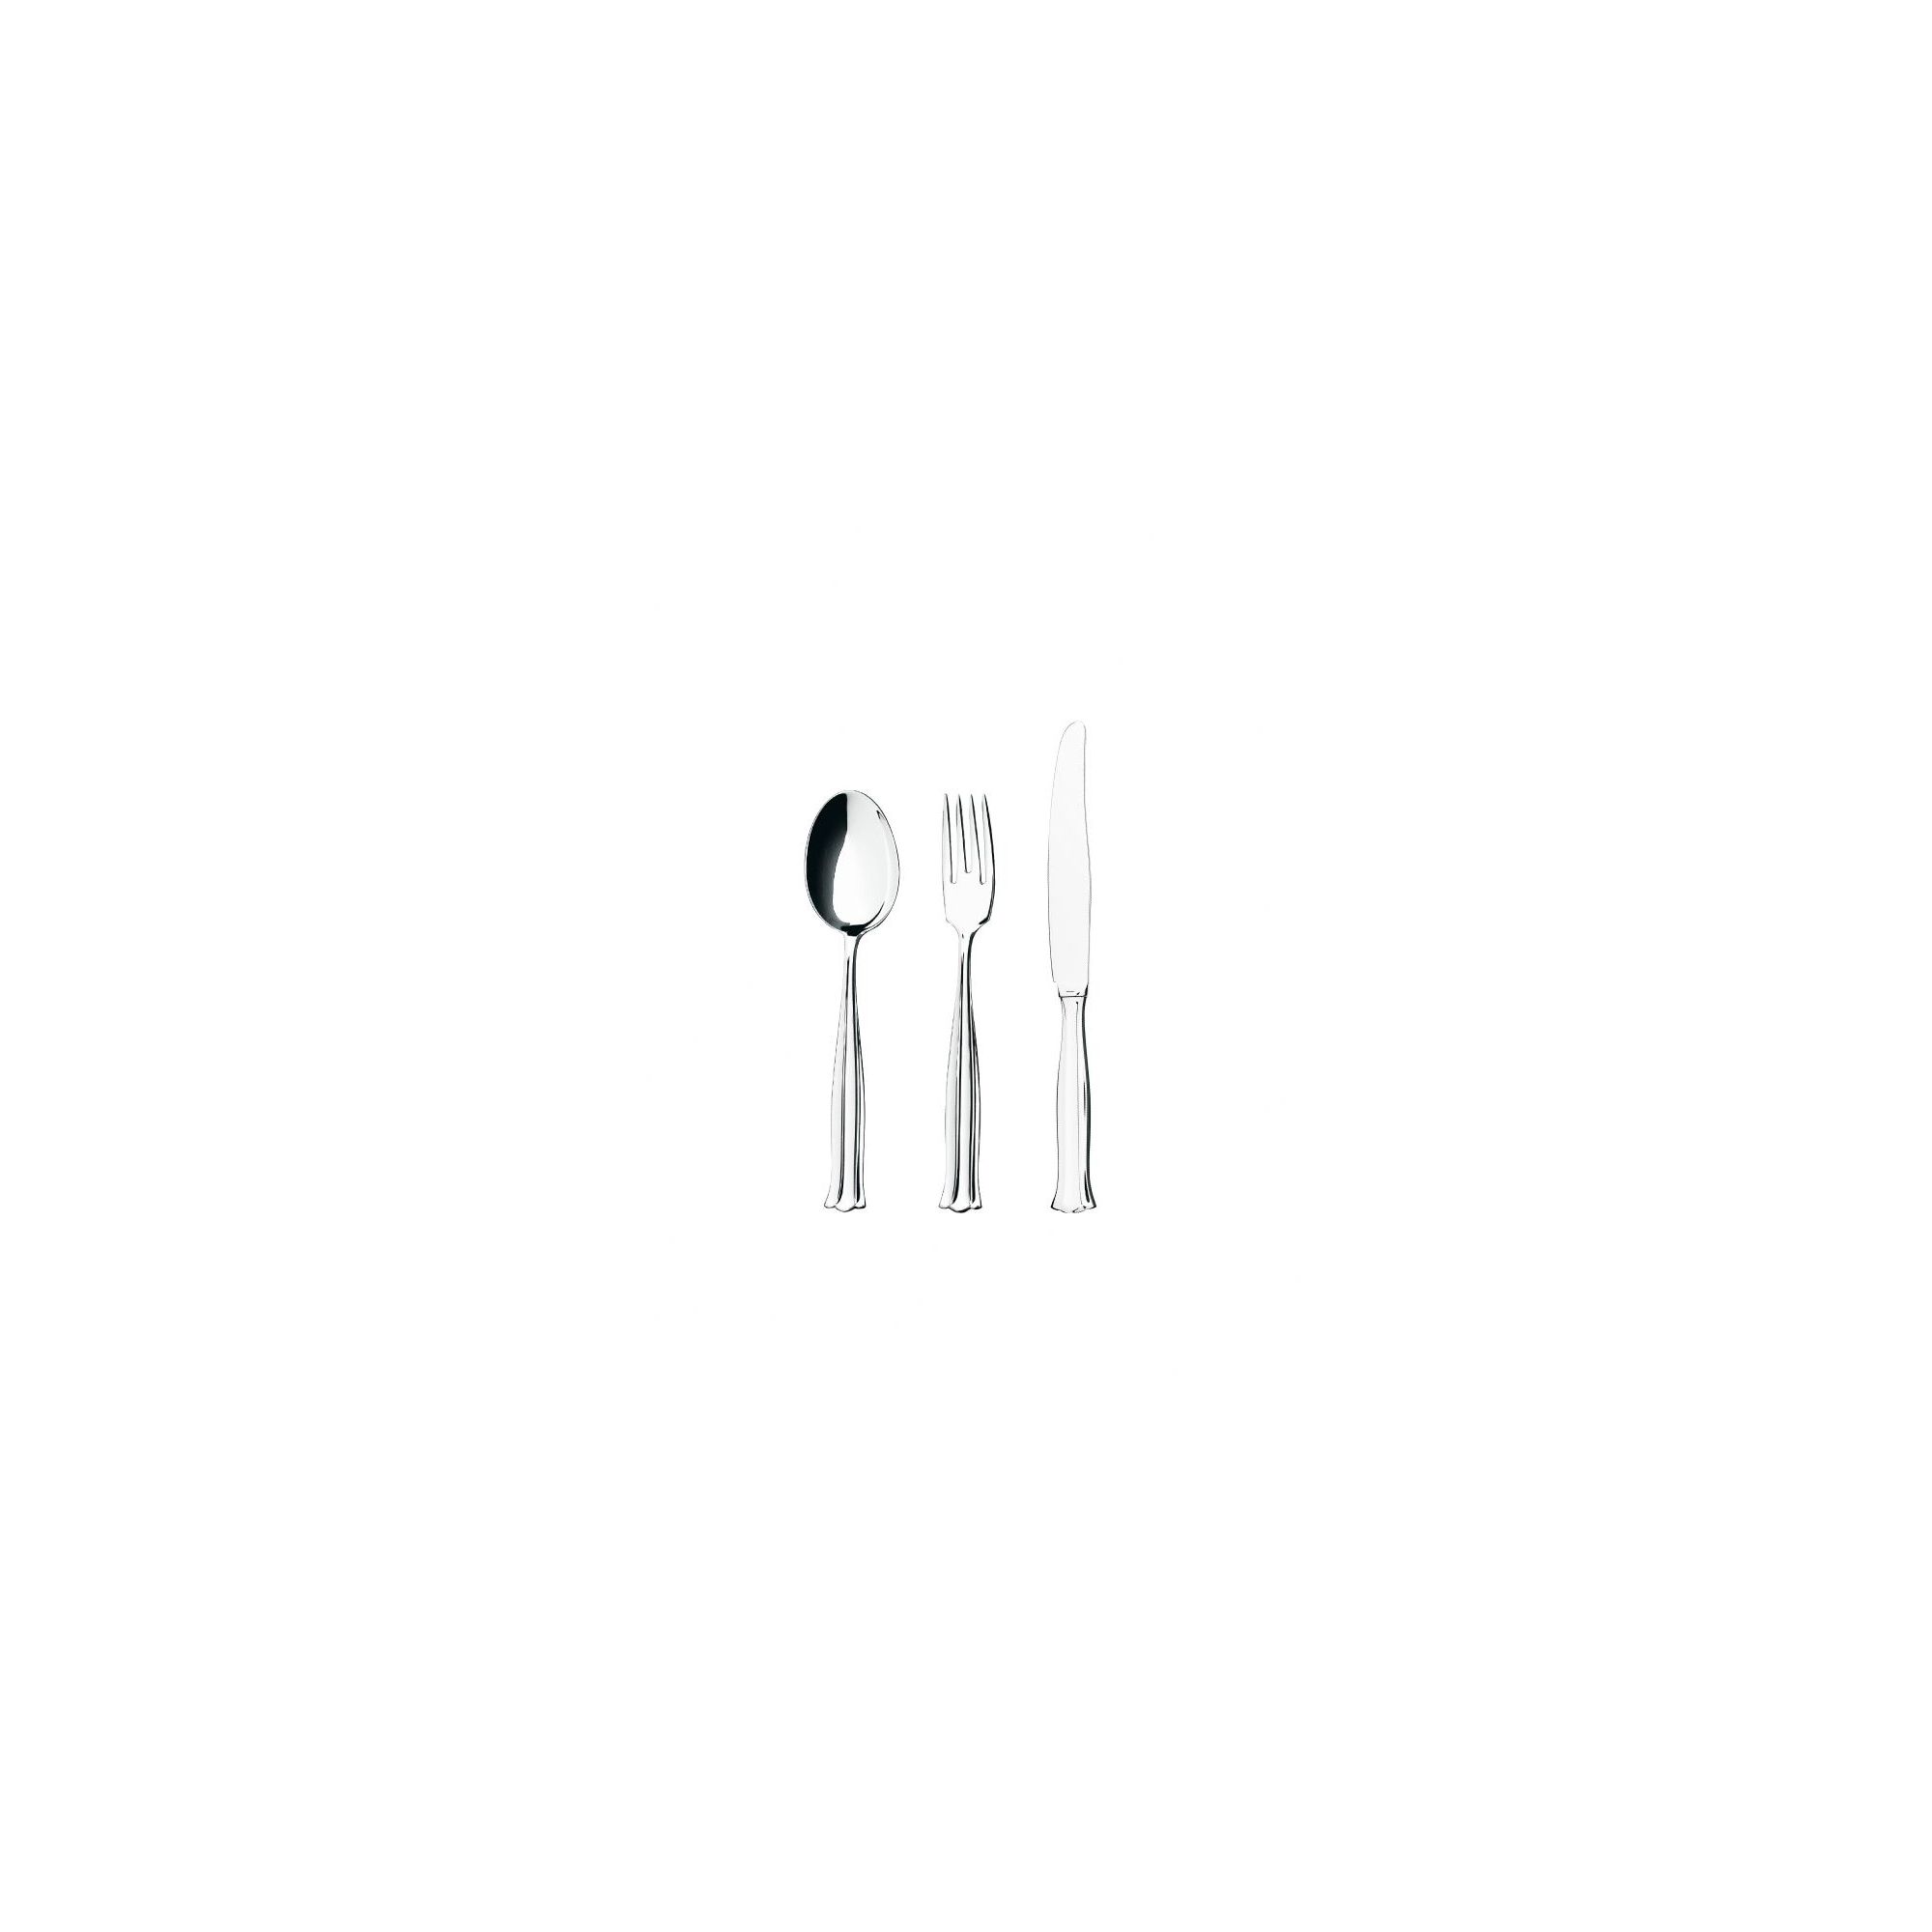 Mema/GAB Birgitta 12 Silver Plated Piece Cutlery Set 1 at Tesco Direct